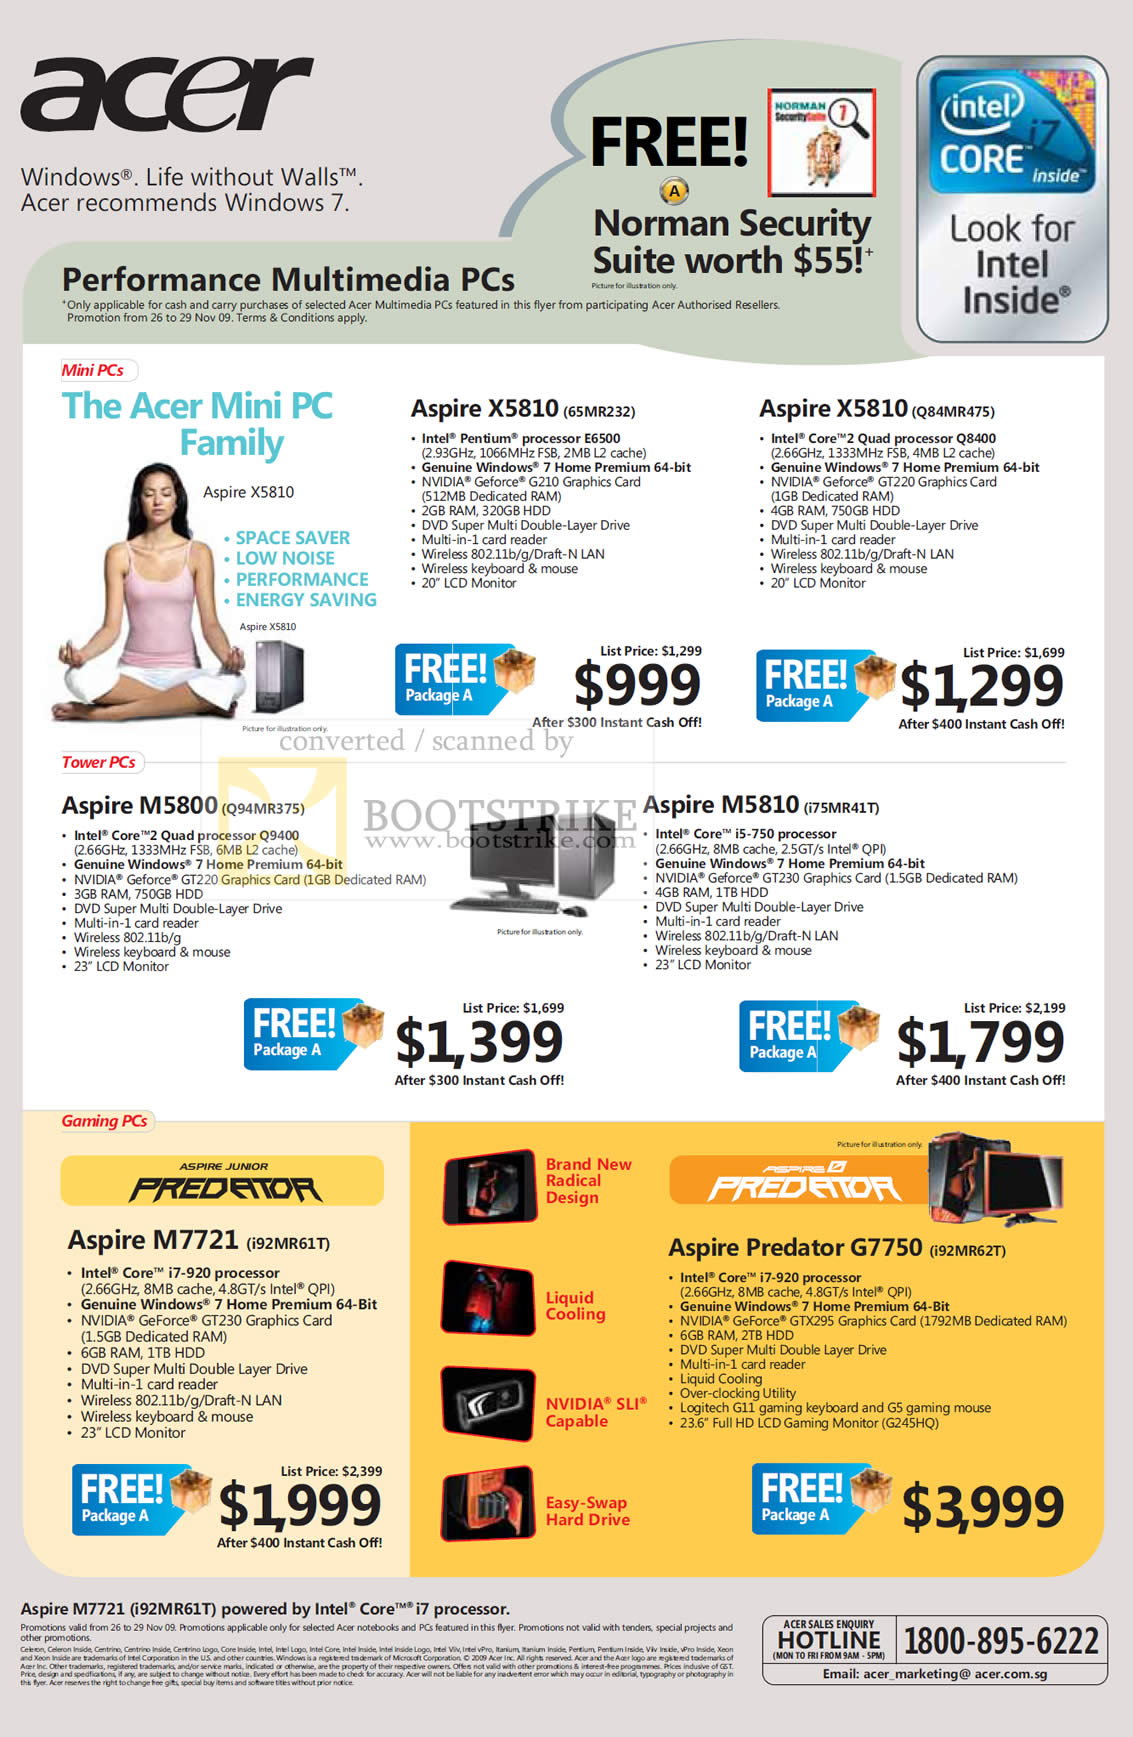 Sitex 2009 price list image brochure of Acer Aspire Mini PC X5810 M5800 M5810 Predator Desktop M7721 G7750